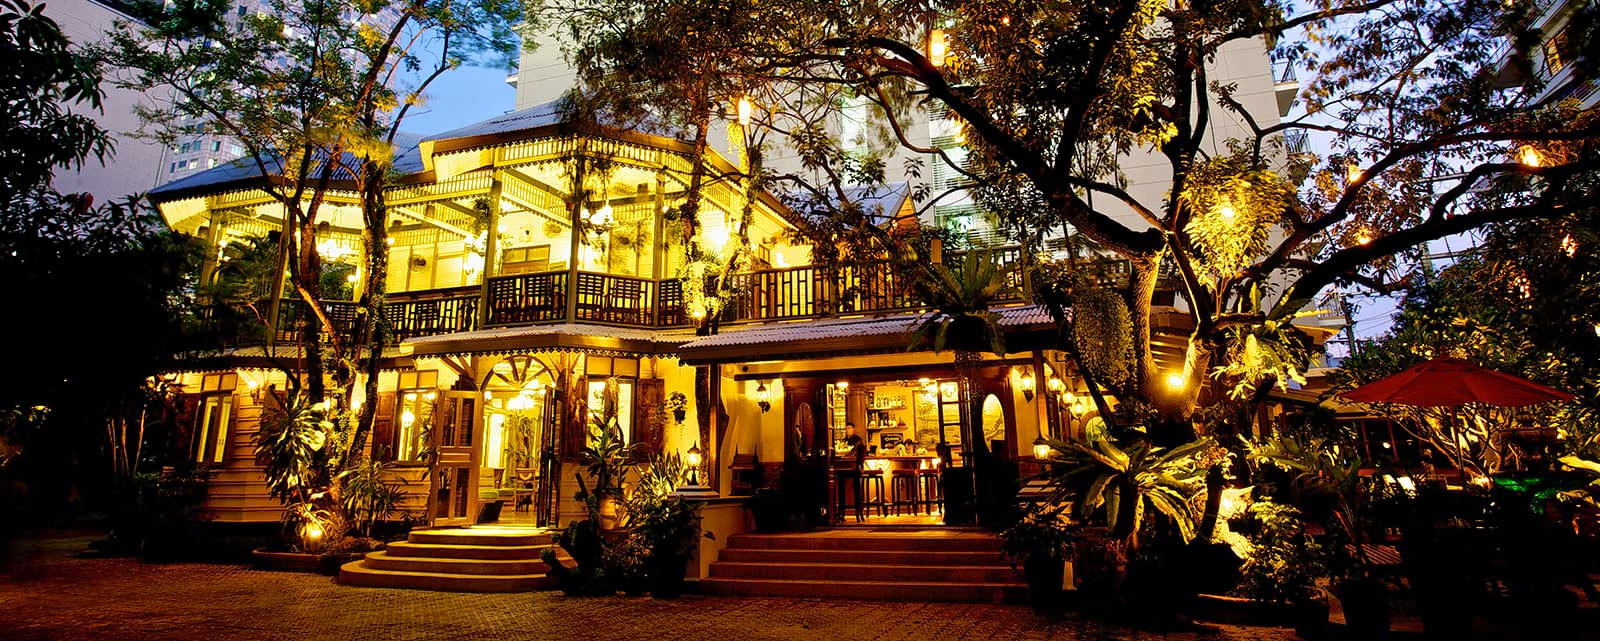 Hemingway's Bar And Restaurant In Bangkok Overview